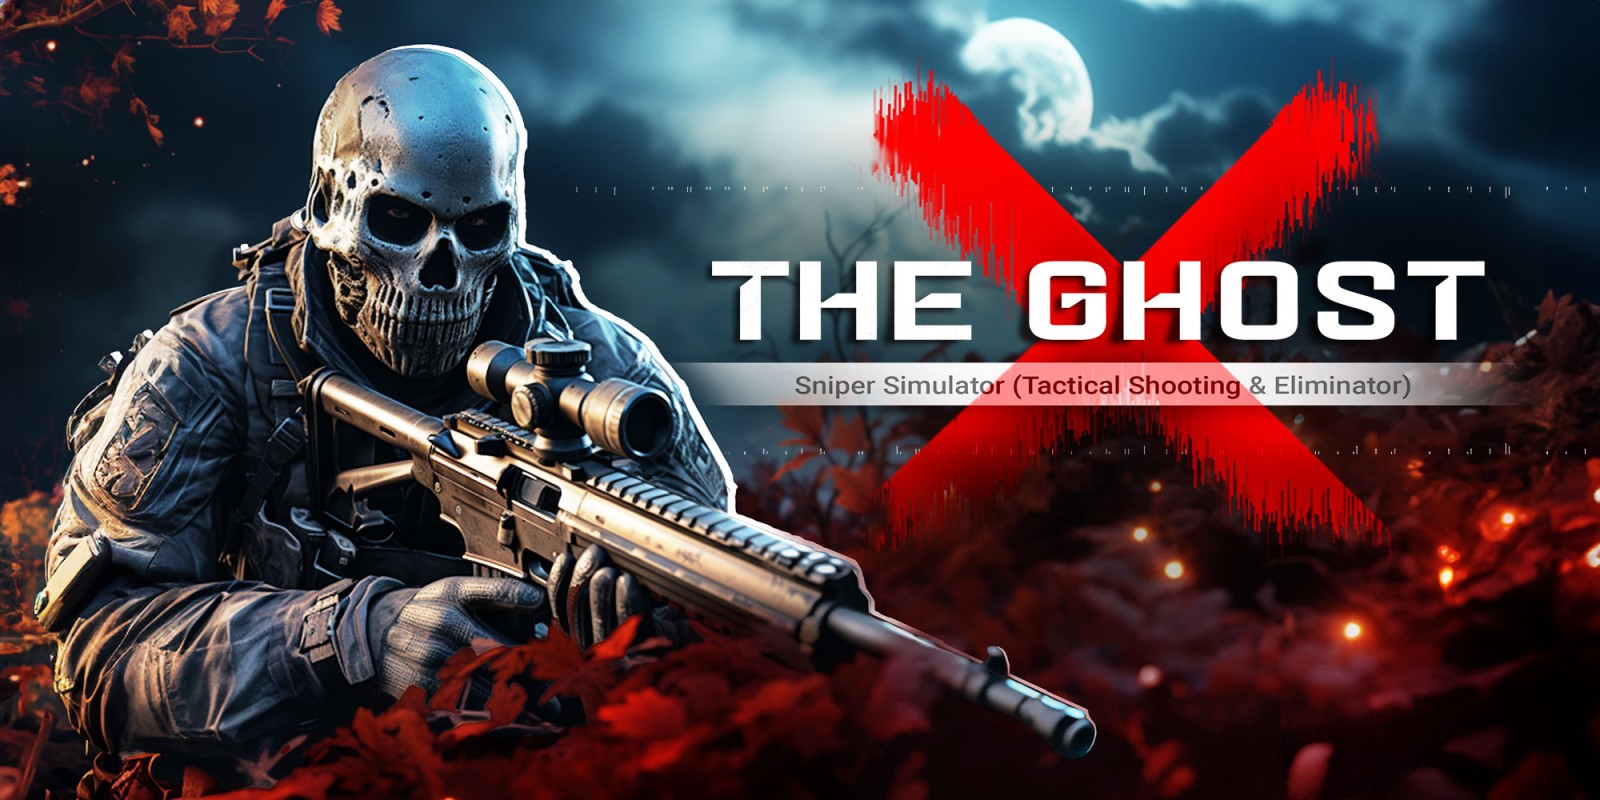 The GhostX : Sniper Simulator (Tactical Shooting & Eliminator)